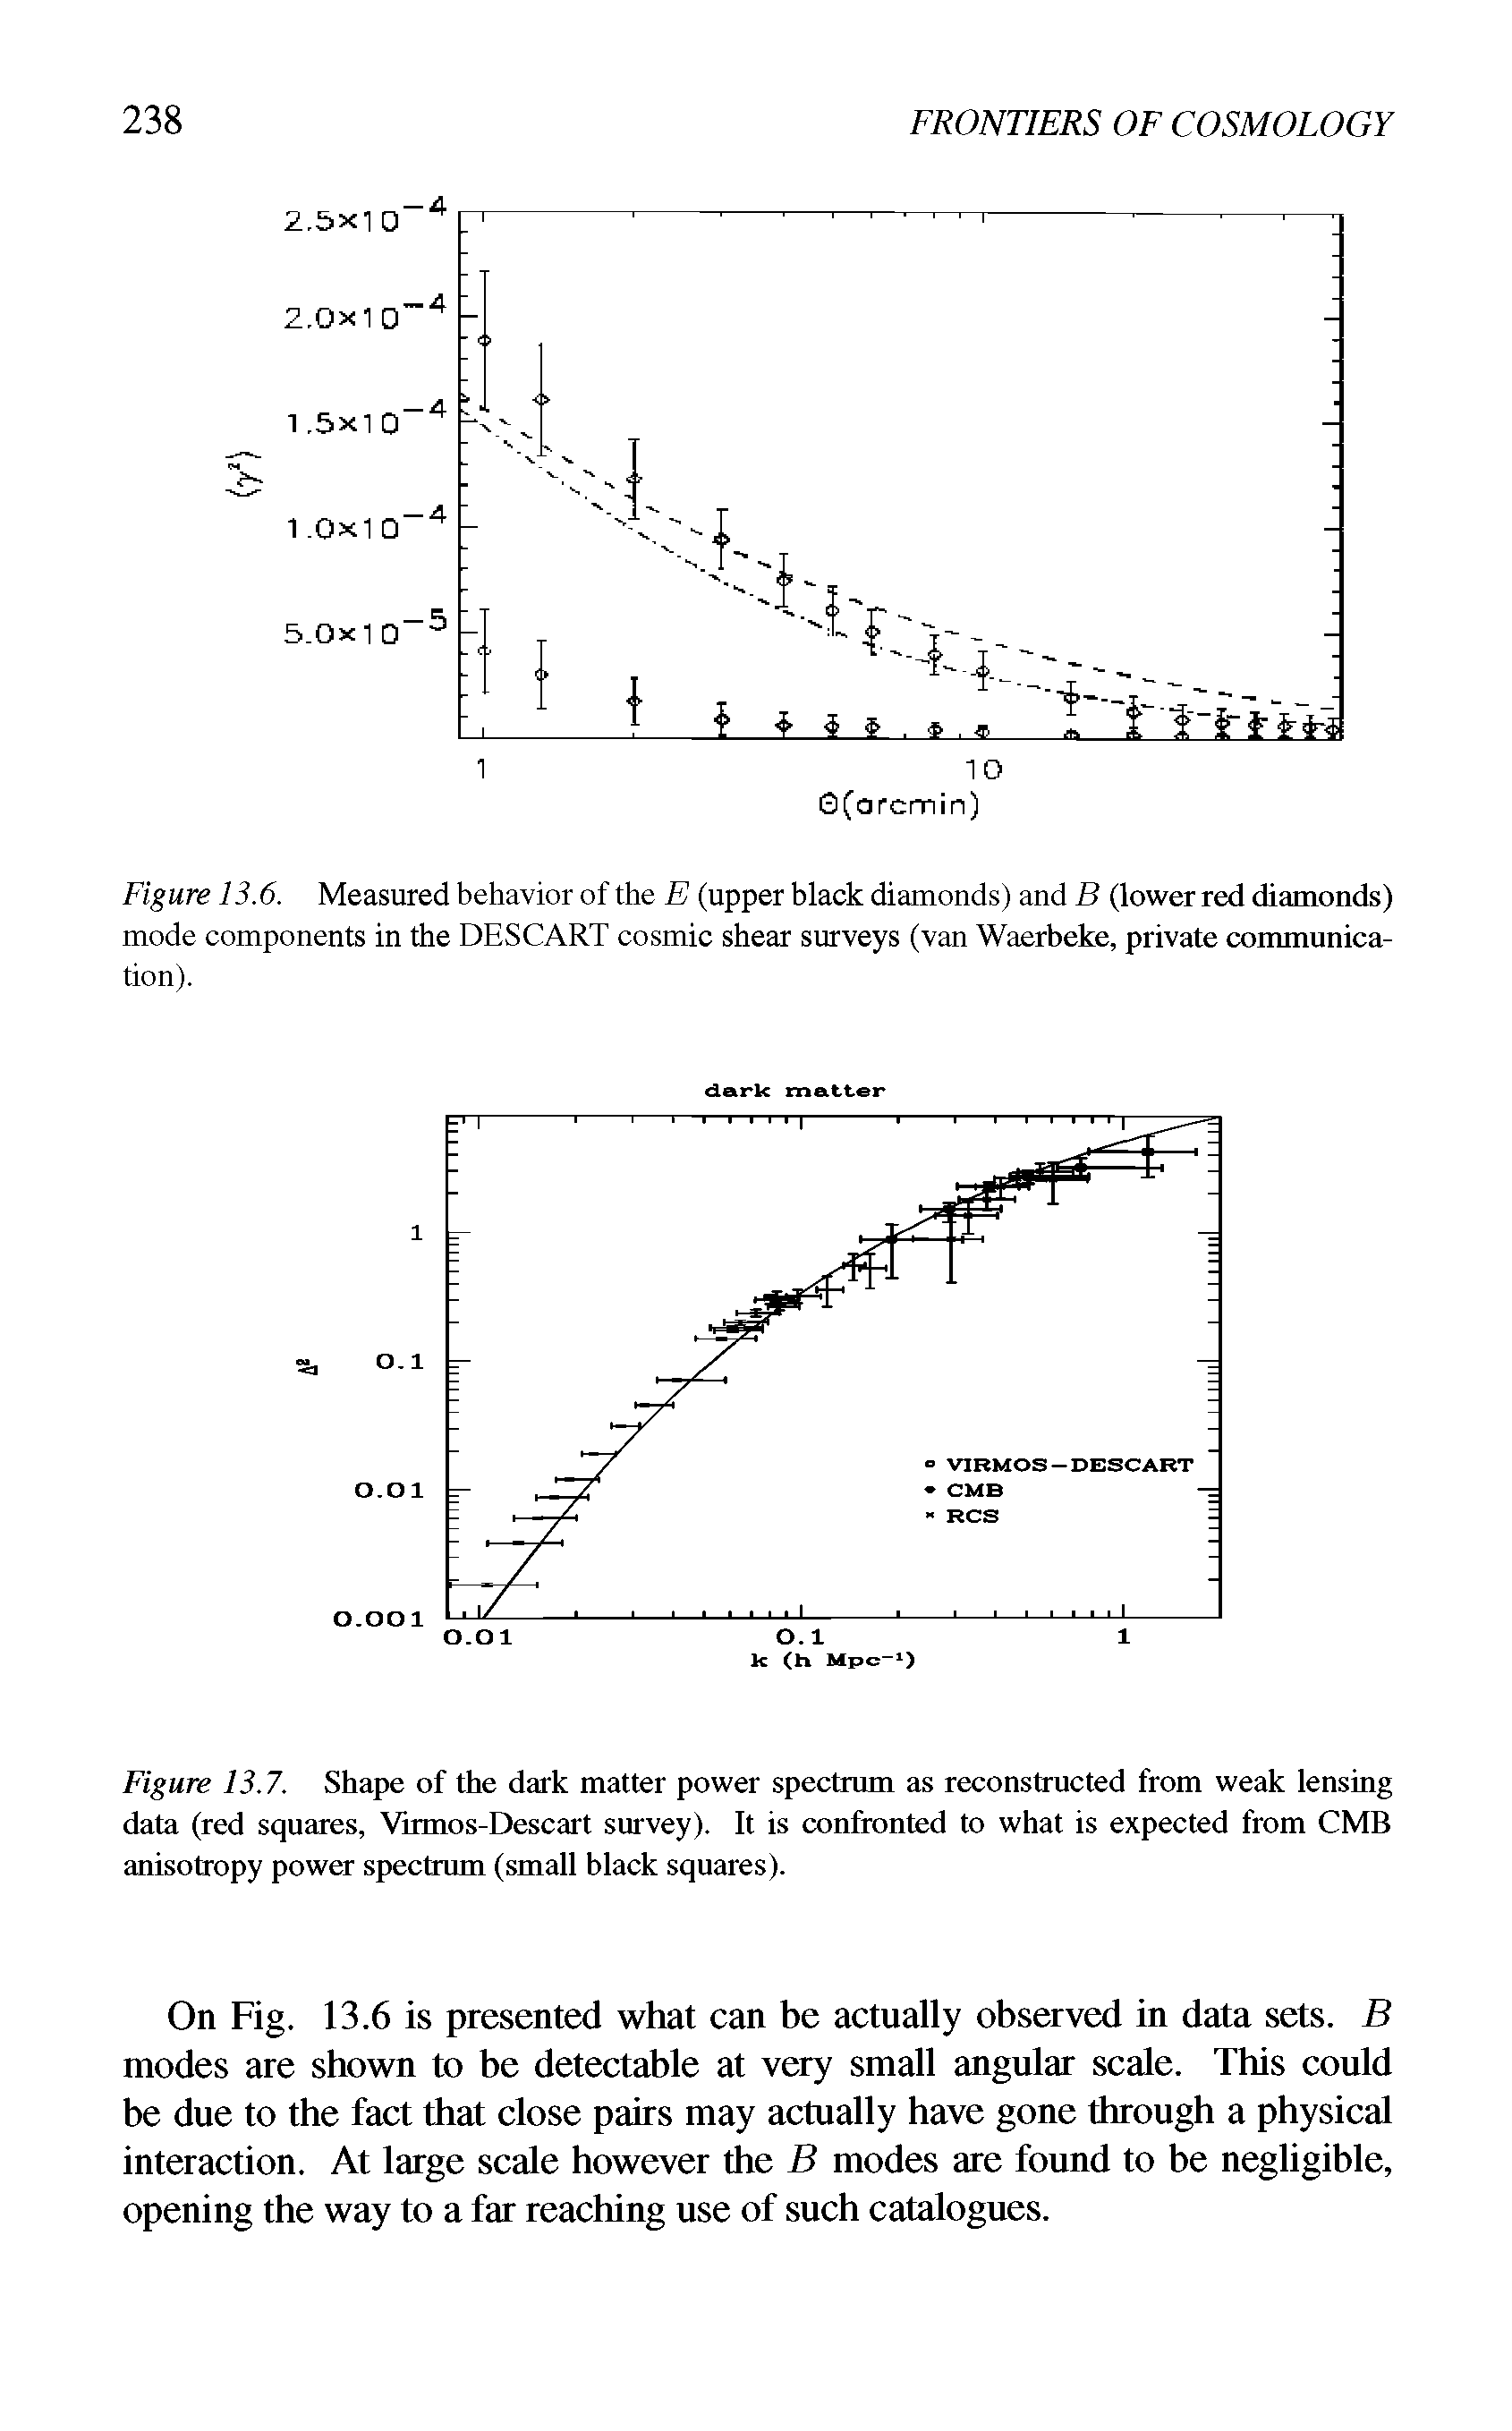 Figure 13.6. Measured behavior of the E (upper black diamonds) and B (lower red diamonds) mode components in the DESCART cosmic shear surveys (van Waerbeke, private communication).